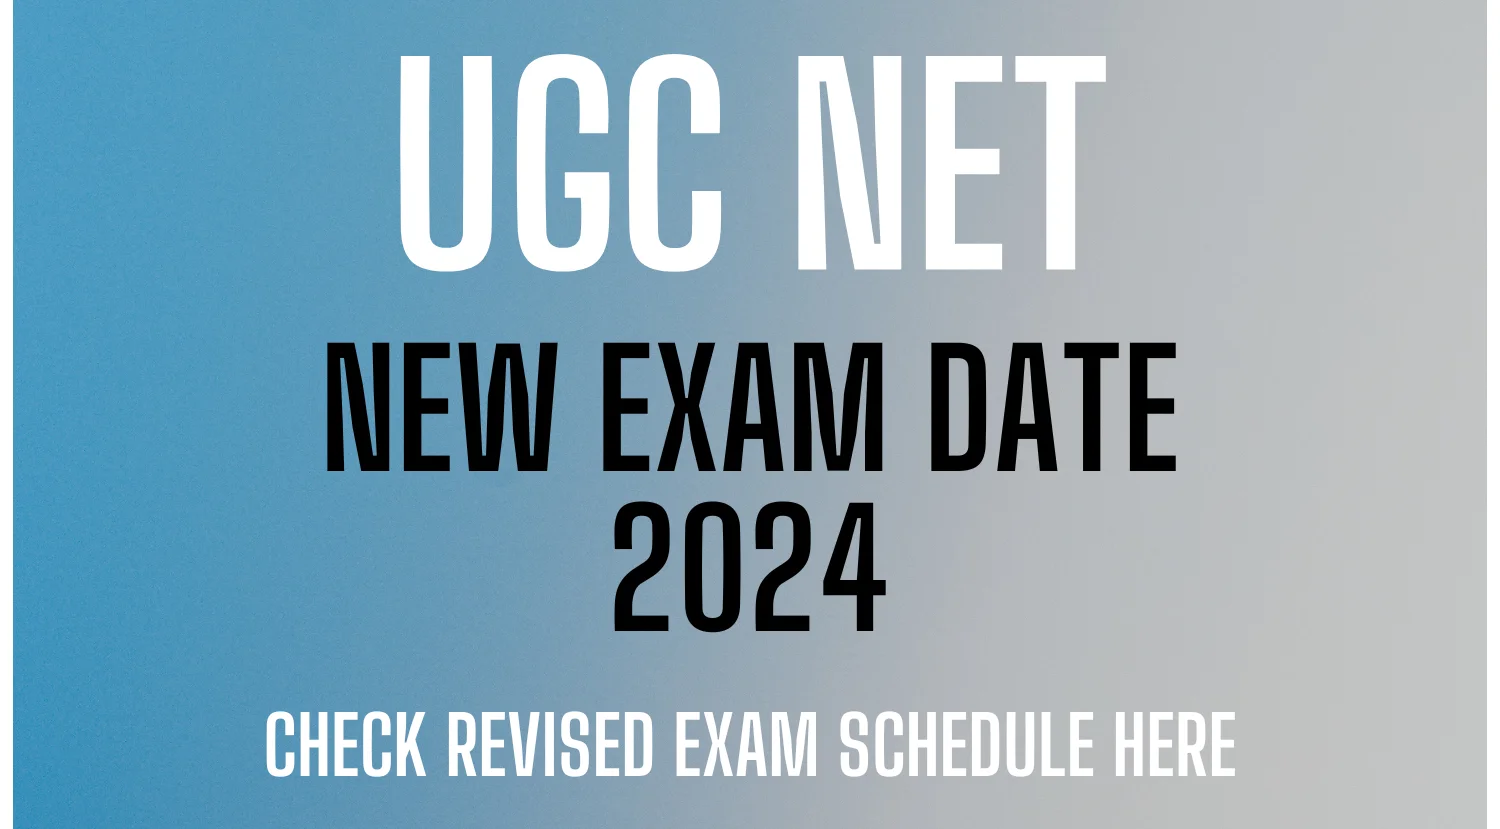 UGC NET New Exam date 2024 - Check Revised Exam Schedule Here